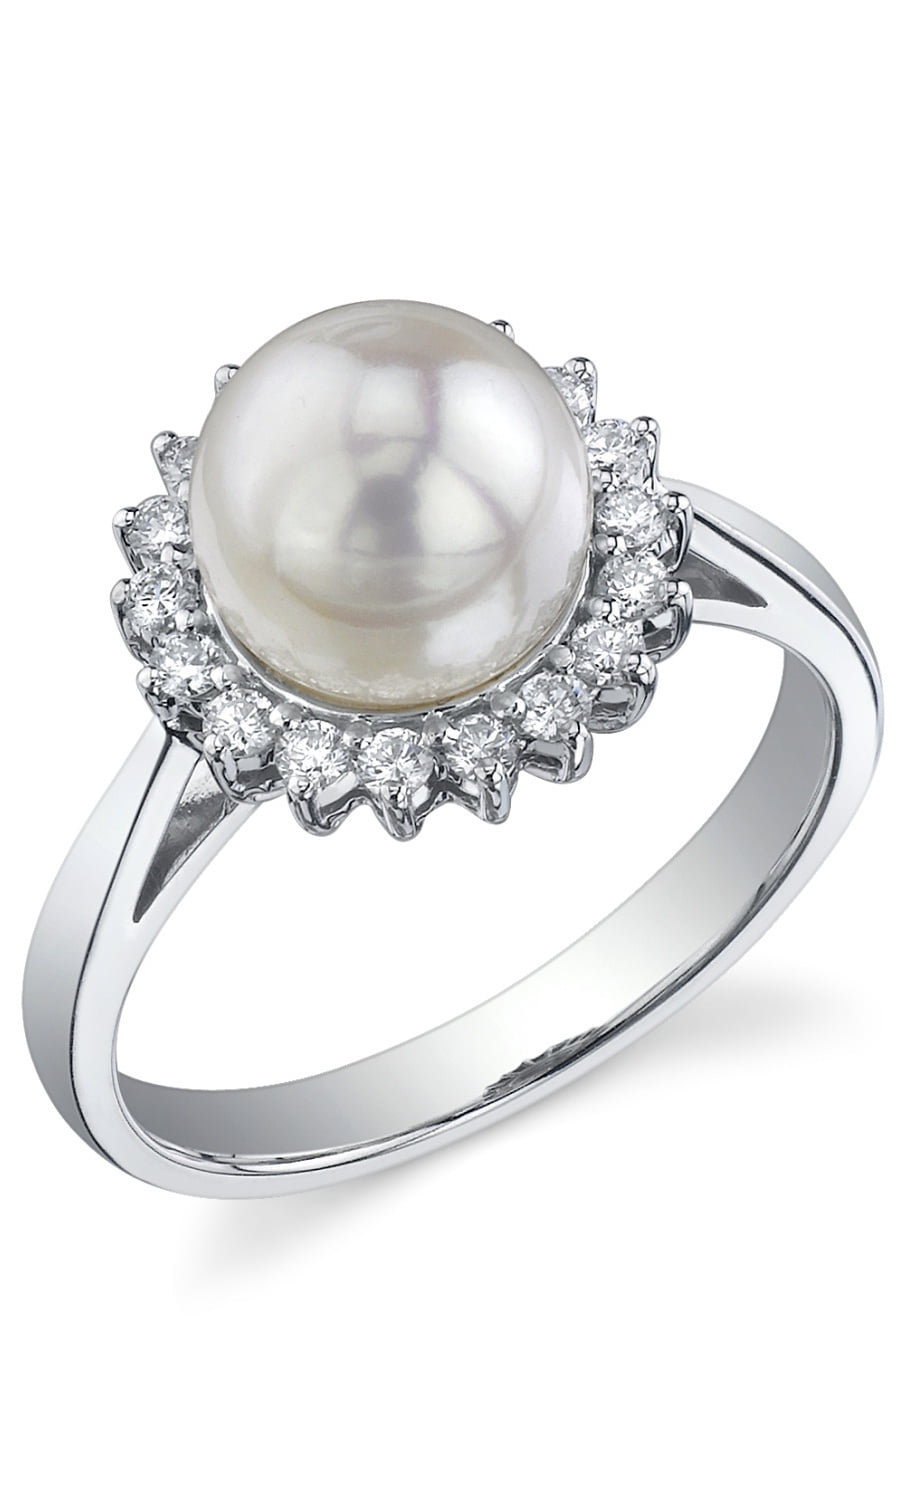 Natural Black Akoya Cultured pearl ring size 7 8 9 Charming